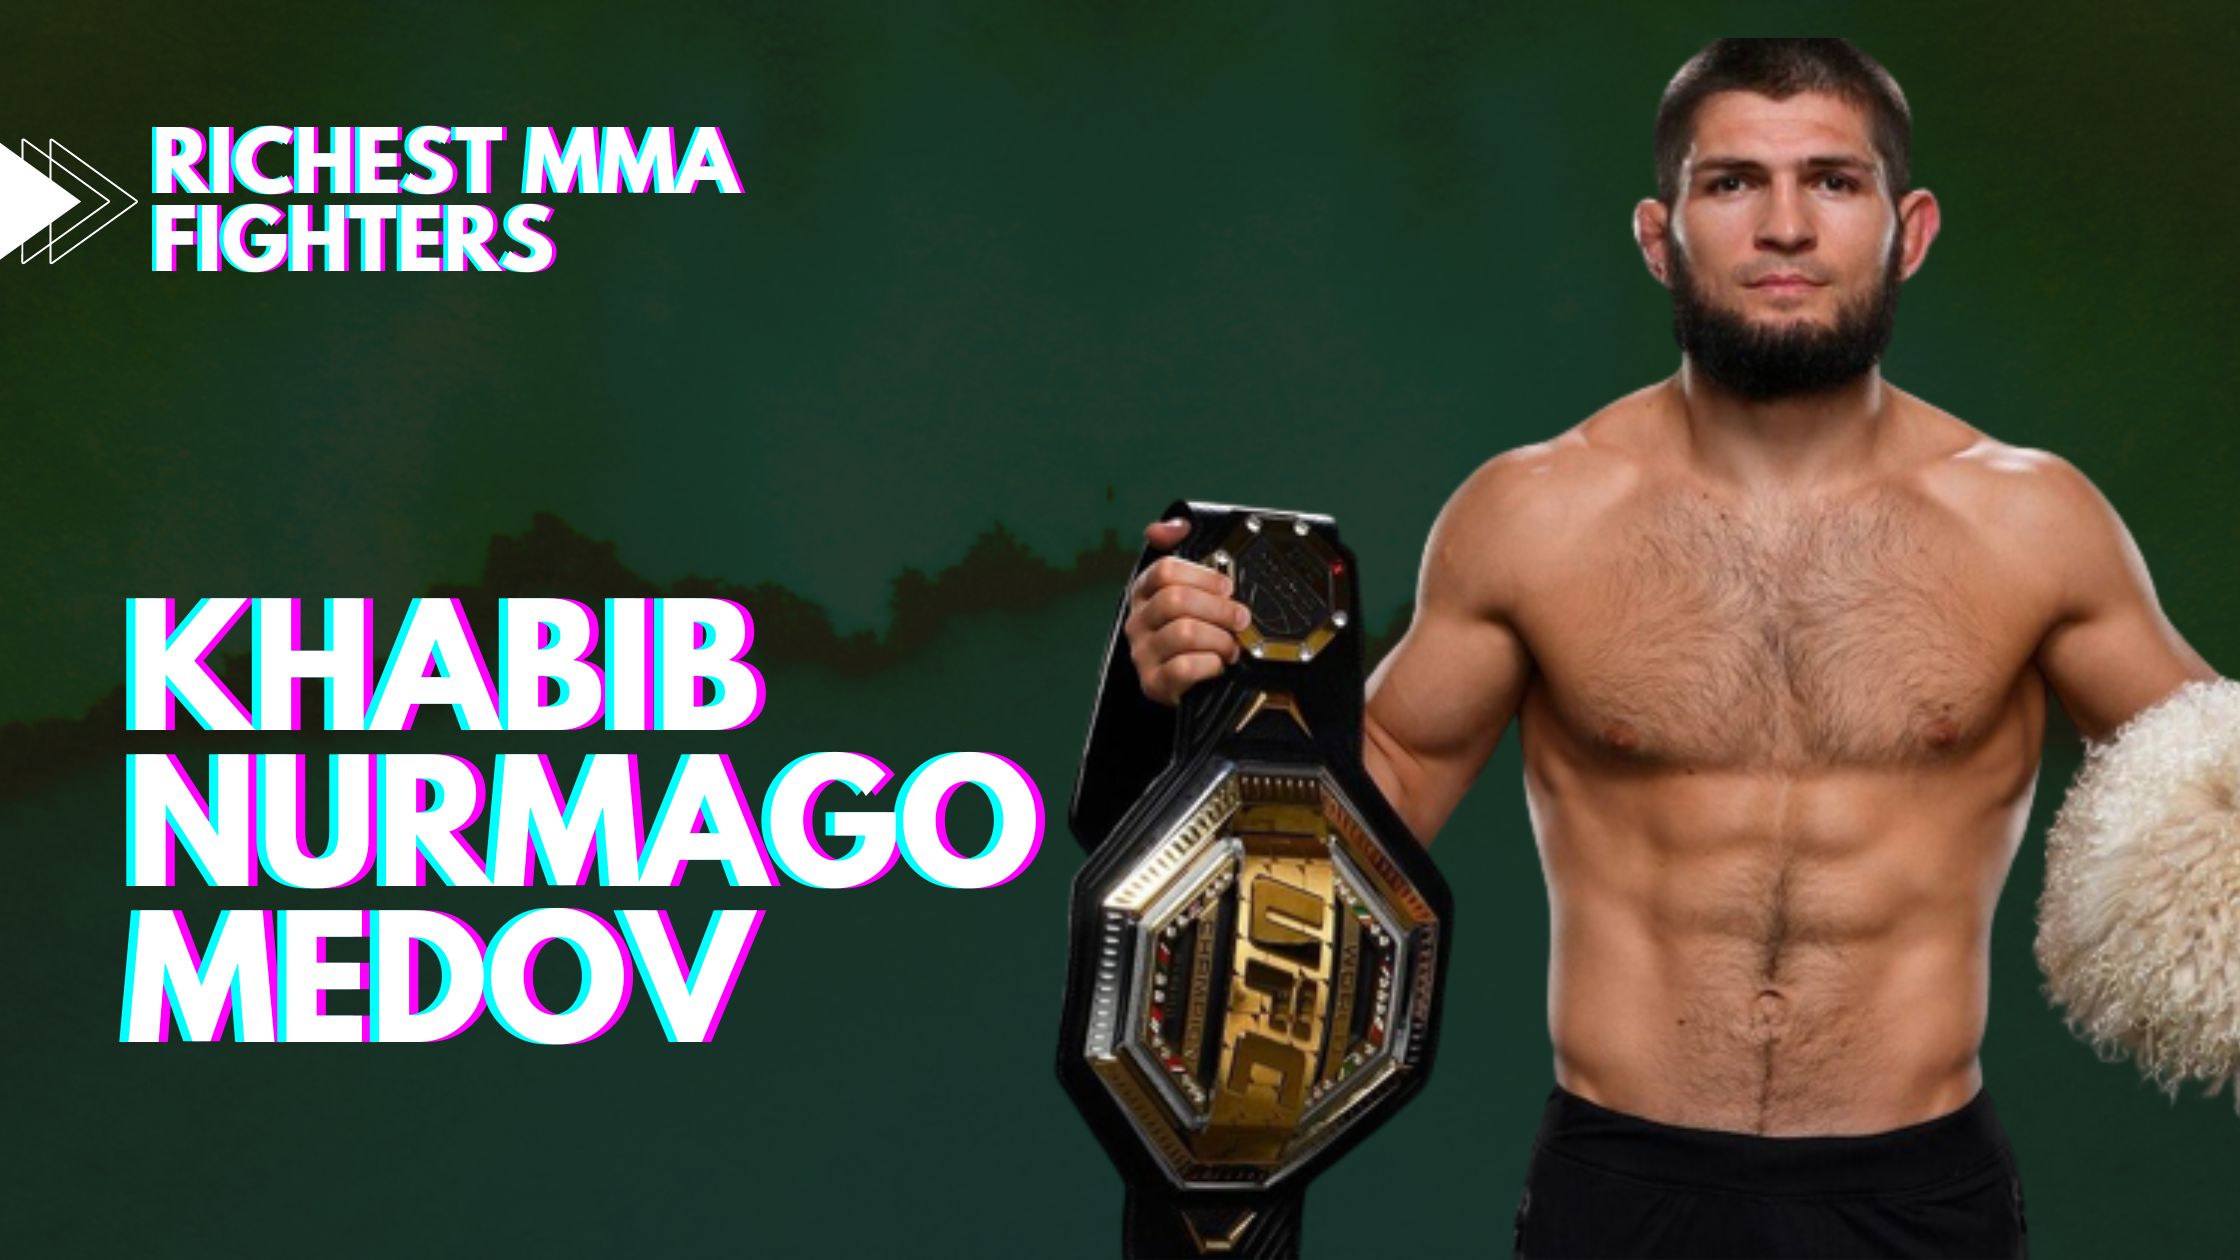  Khabib Nurmagomedov - Richest MMA fighters